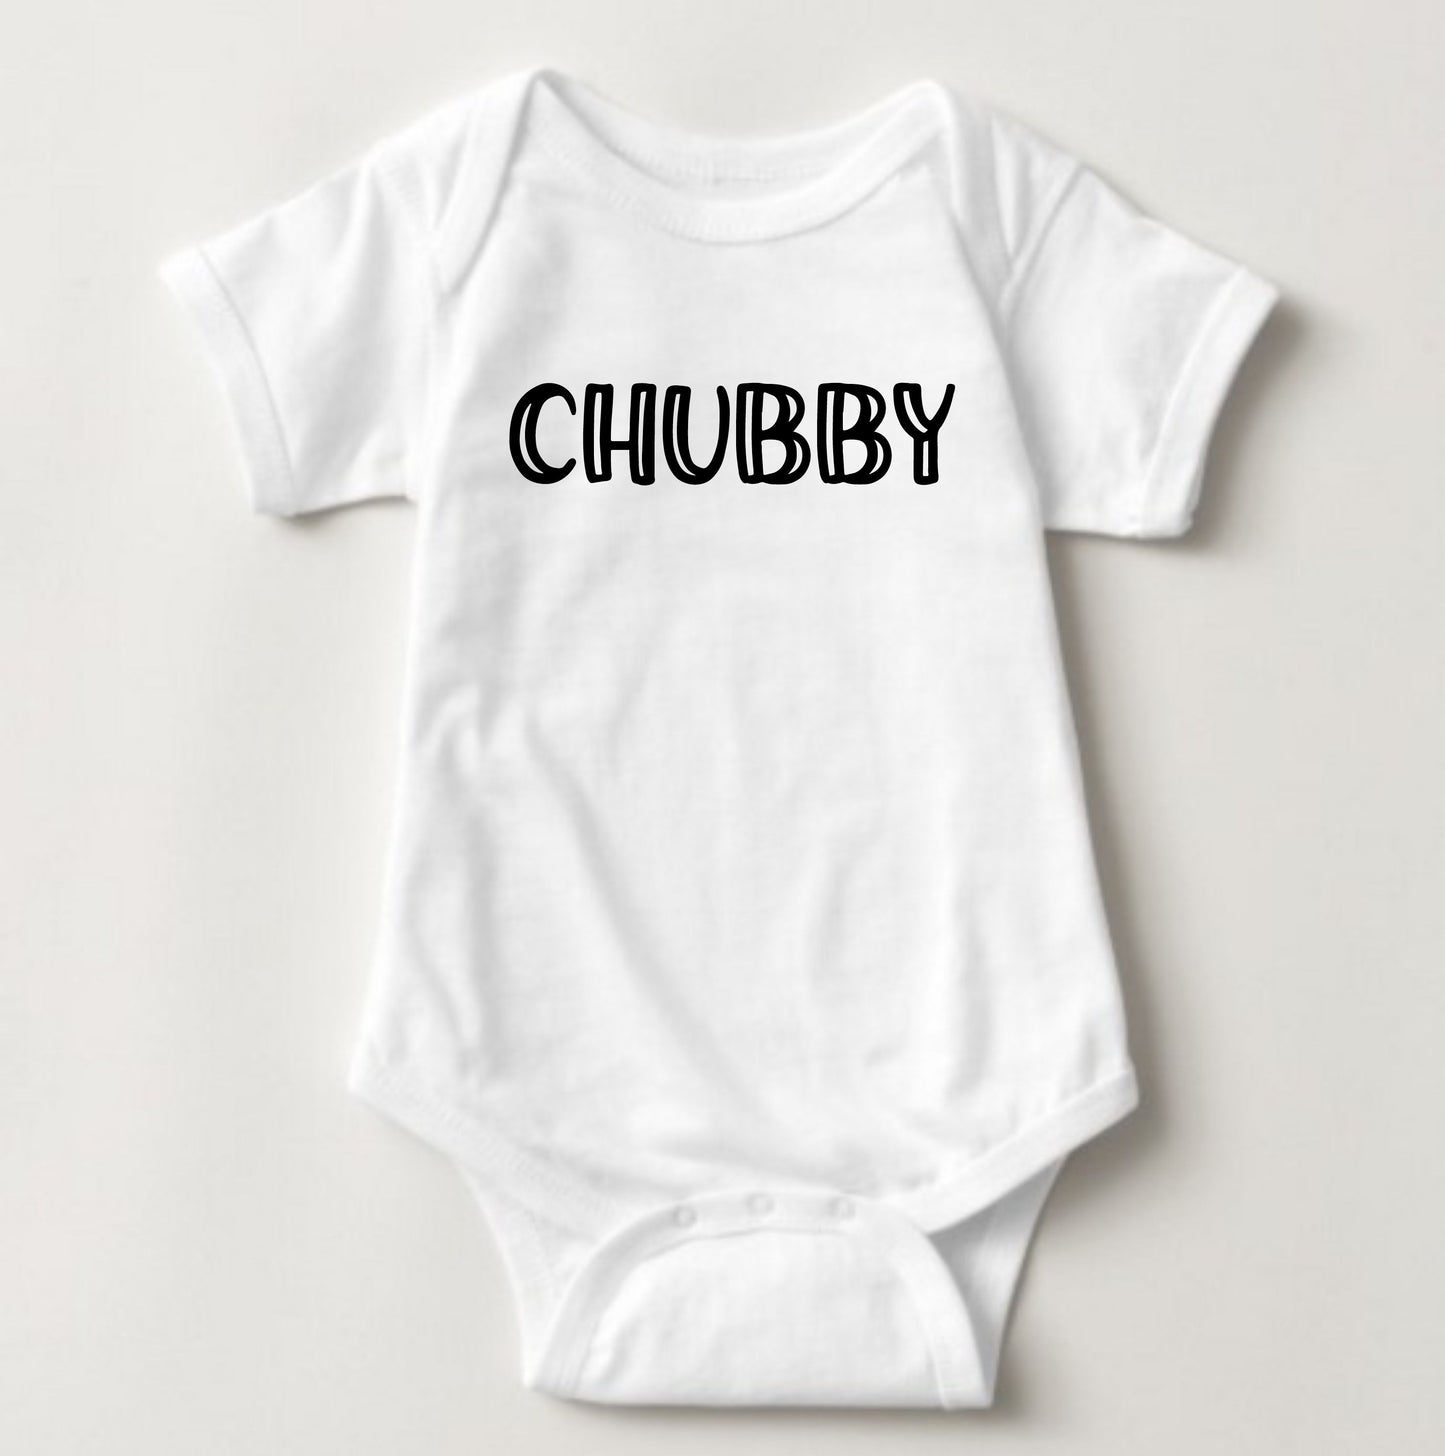 Baby Statement Onesies- Chubby